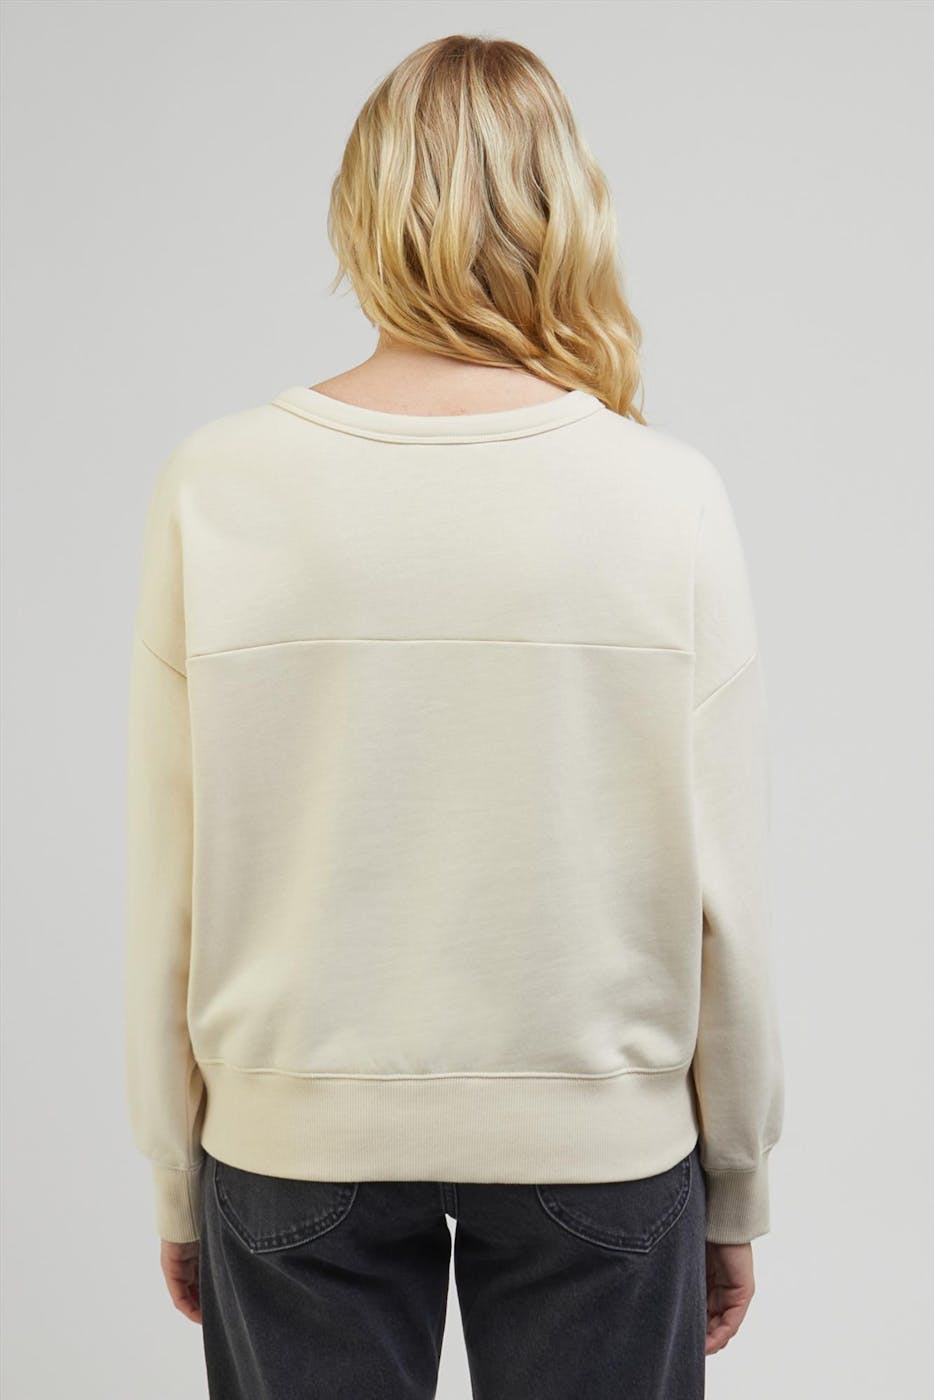 Lee - Beige Henley sweater